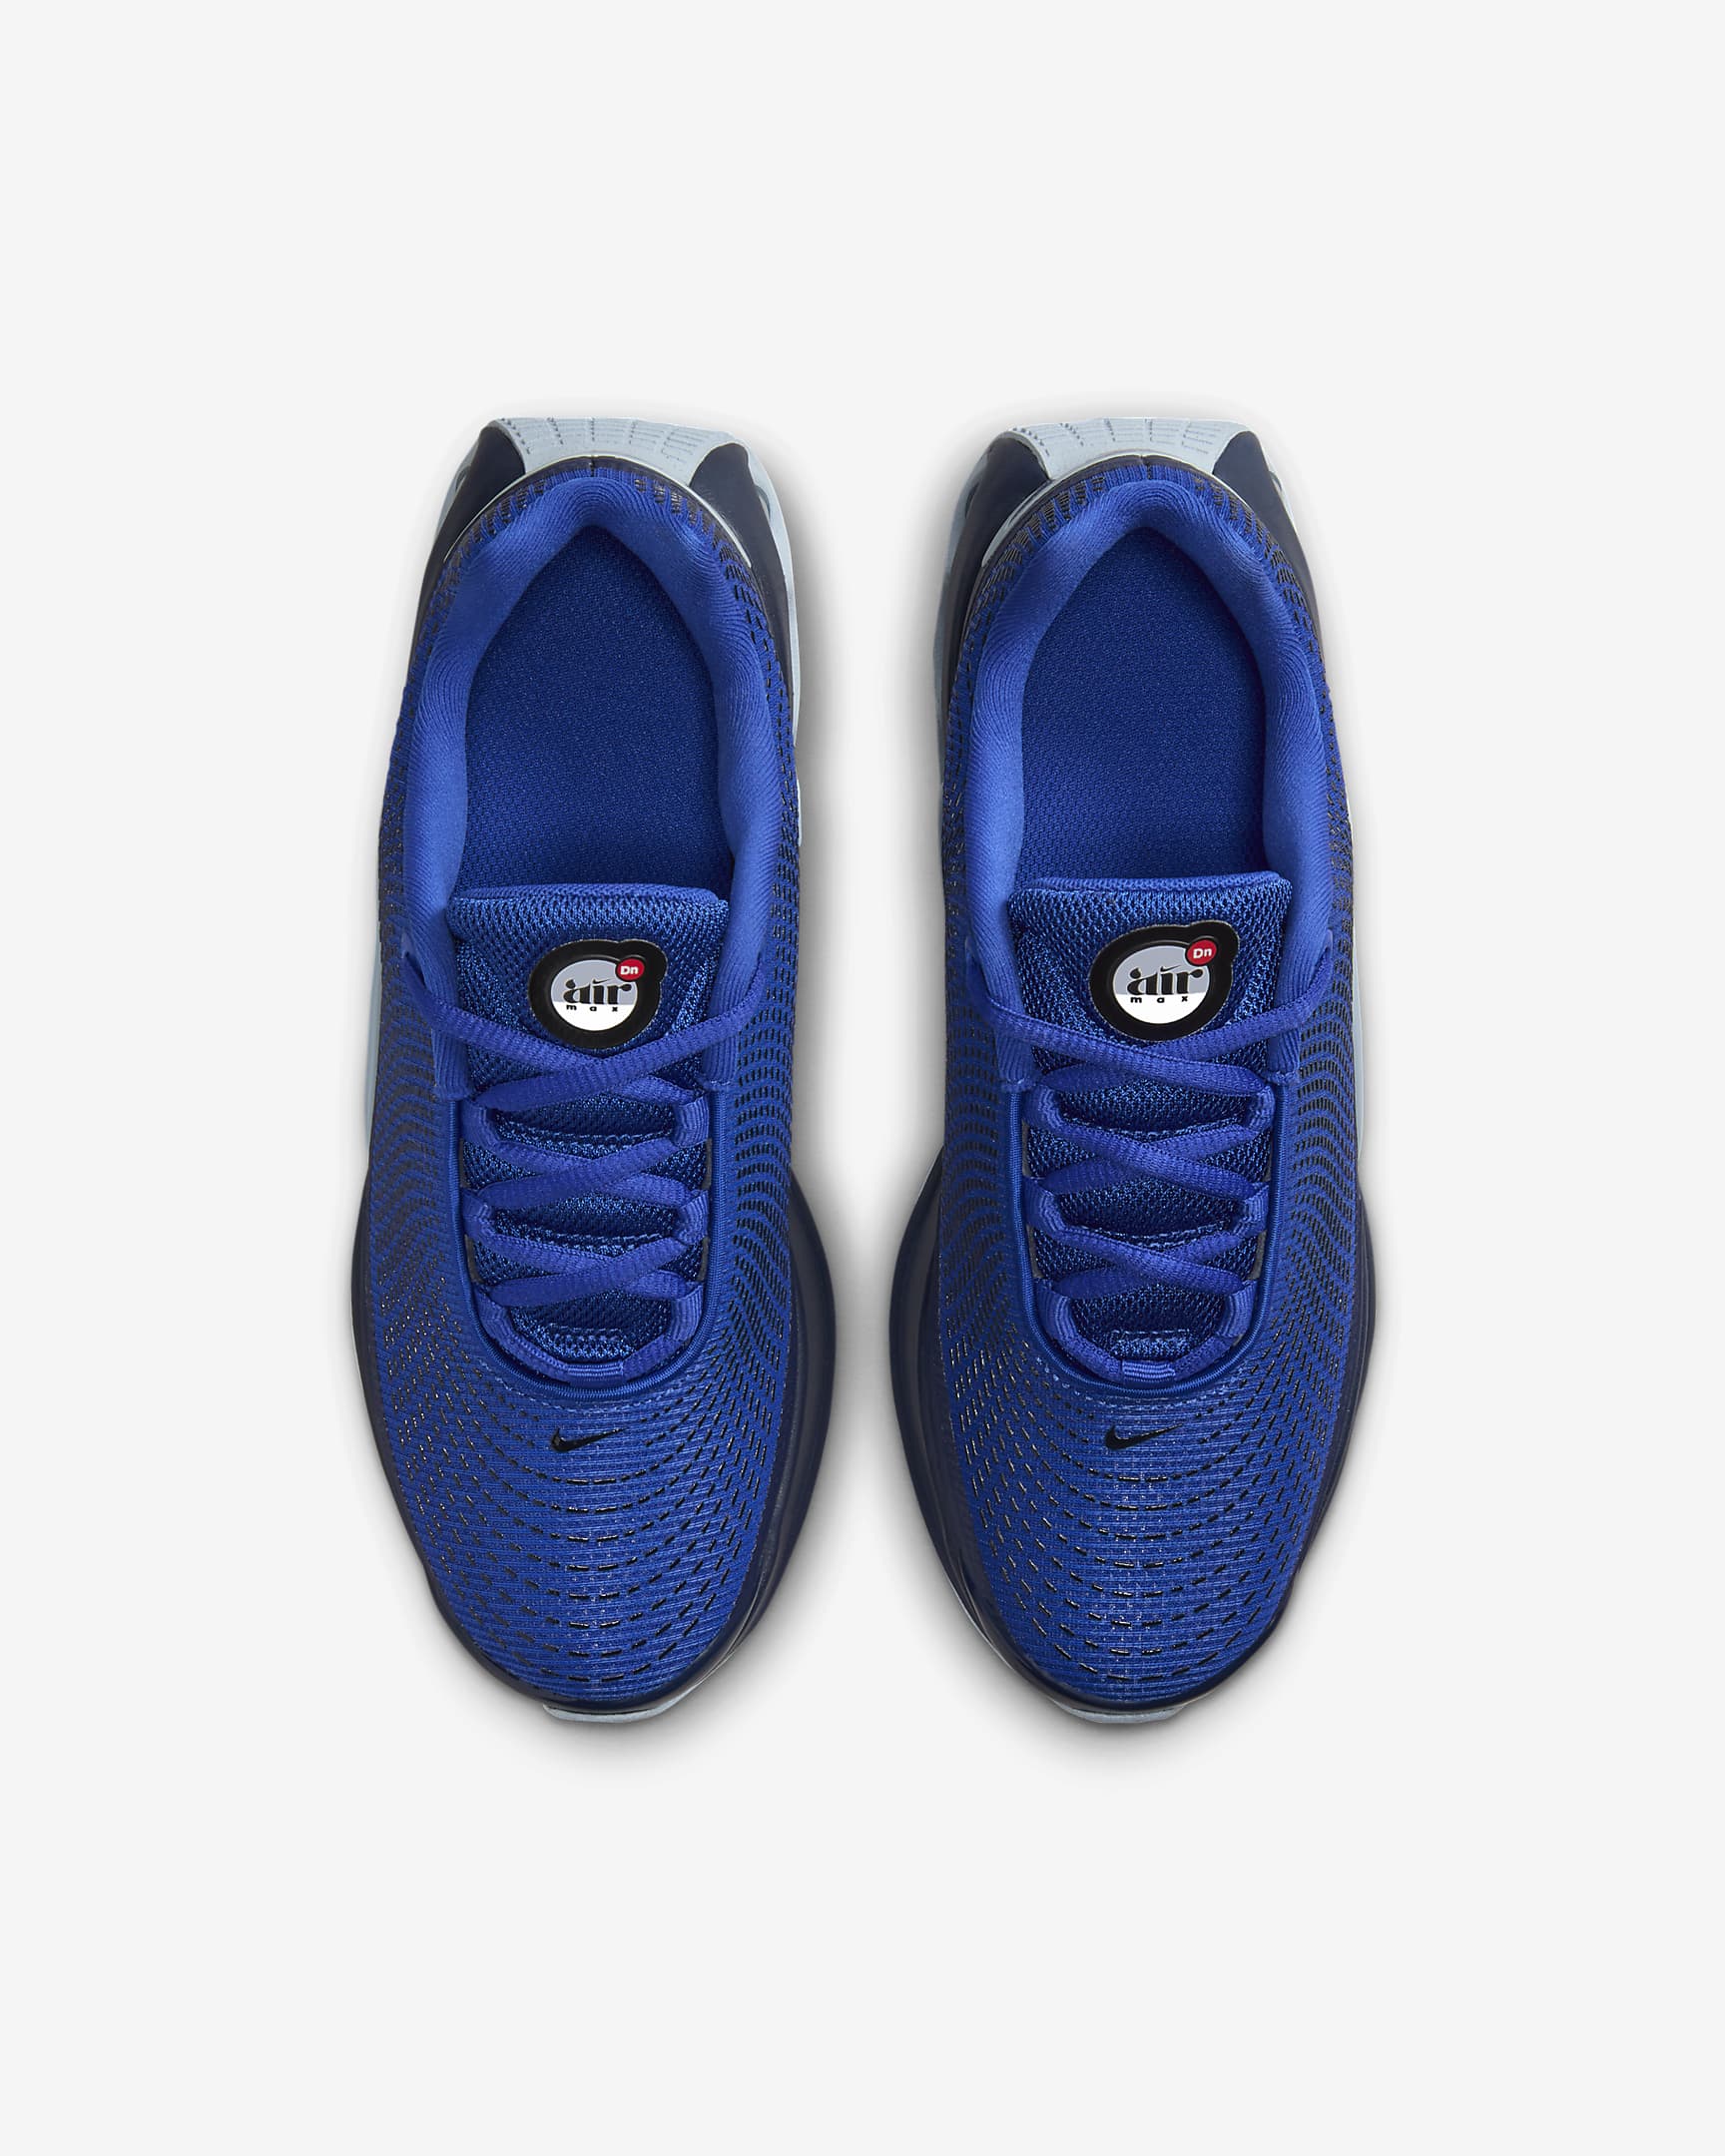 Nike Air Max Dn Big Kids' Shoes - Hyper Blue/Midnight Navy/Light Armory Blue/White